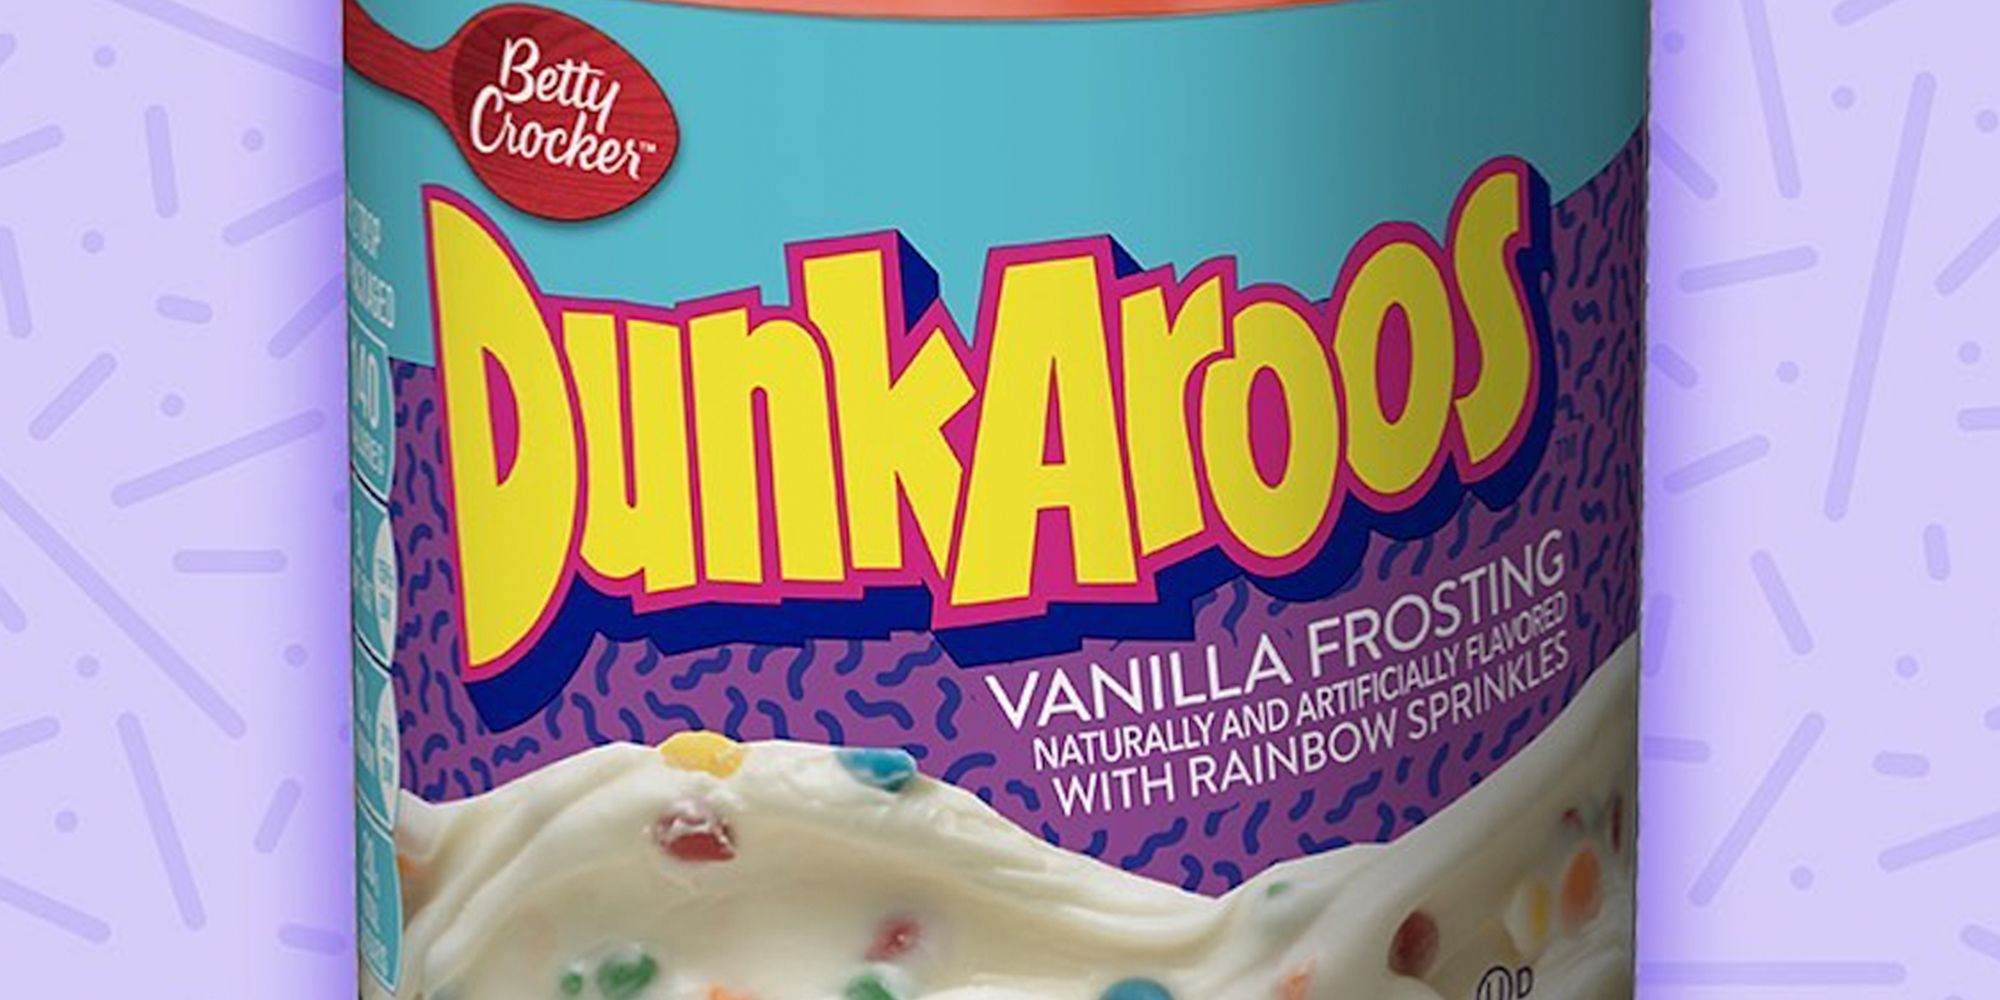 Dunkaroos Snack Vanilla Creme Rainbow Sprinkles Nostalgia Rare Limited Edition 